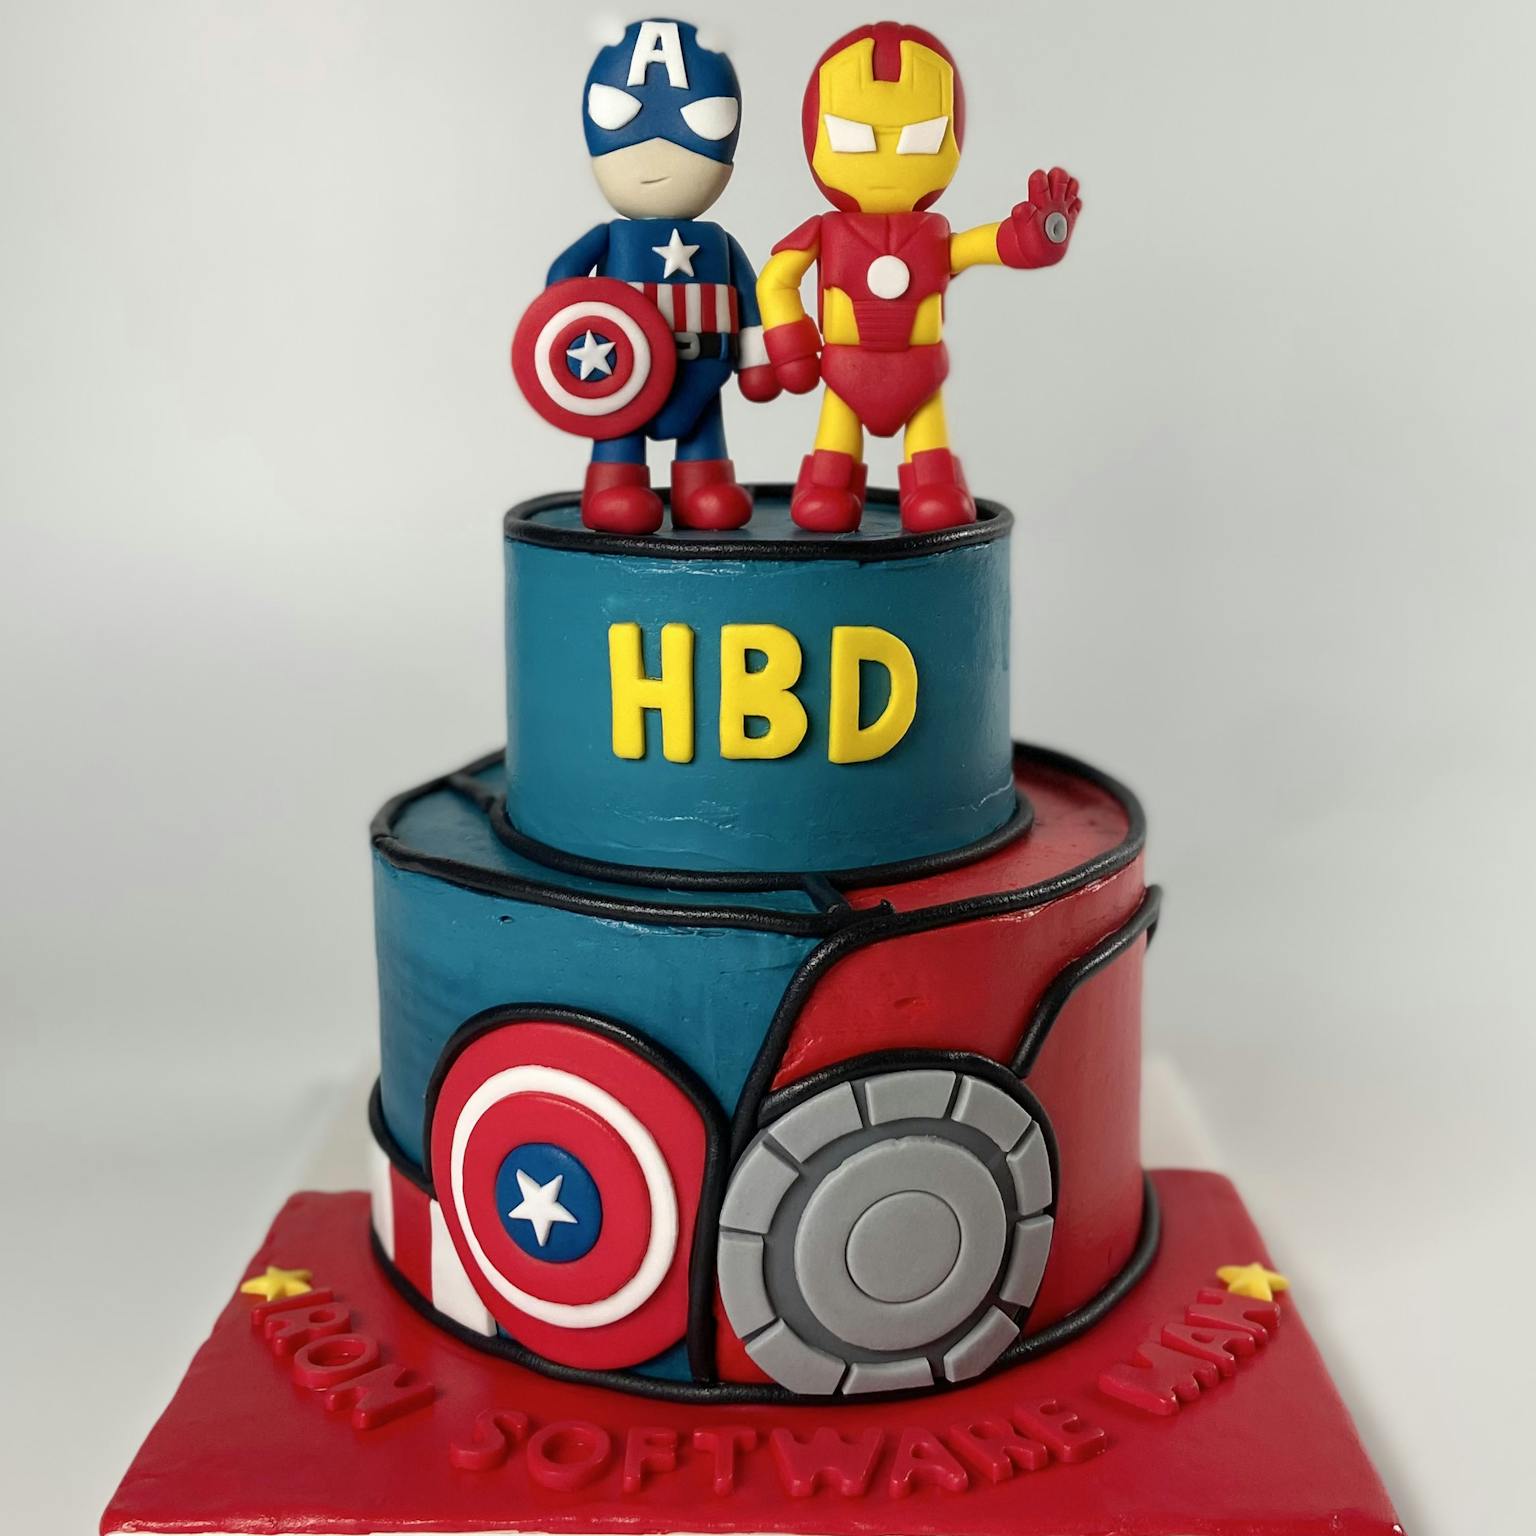 100% edible fondant sculpted Marvel Iron Man and Captain America cake